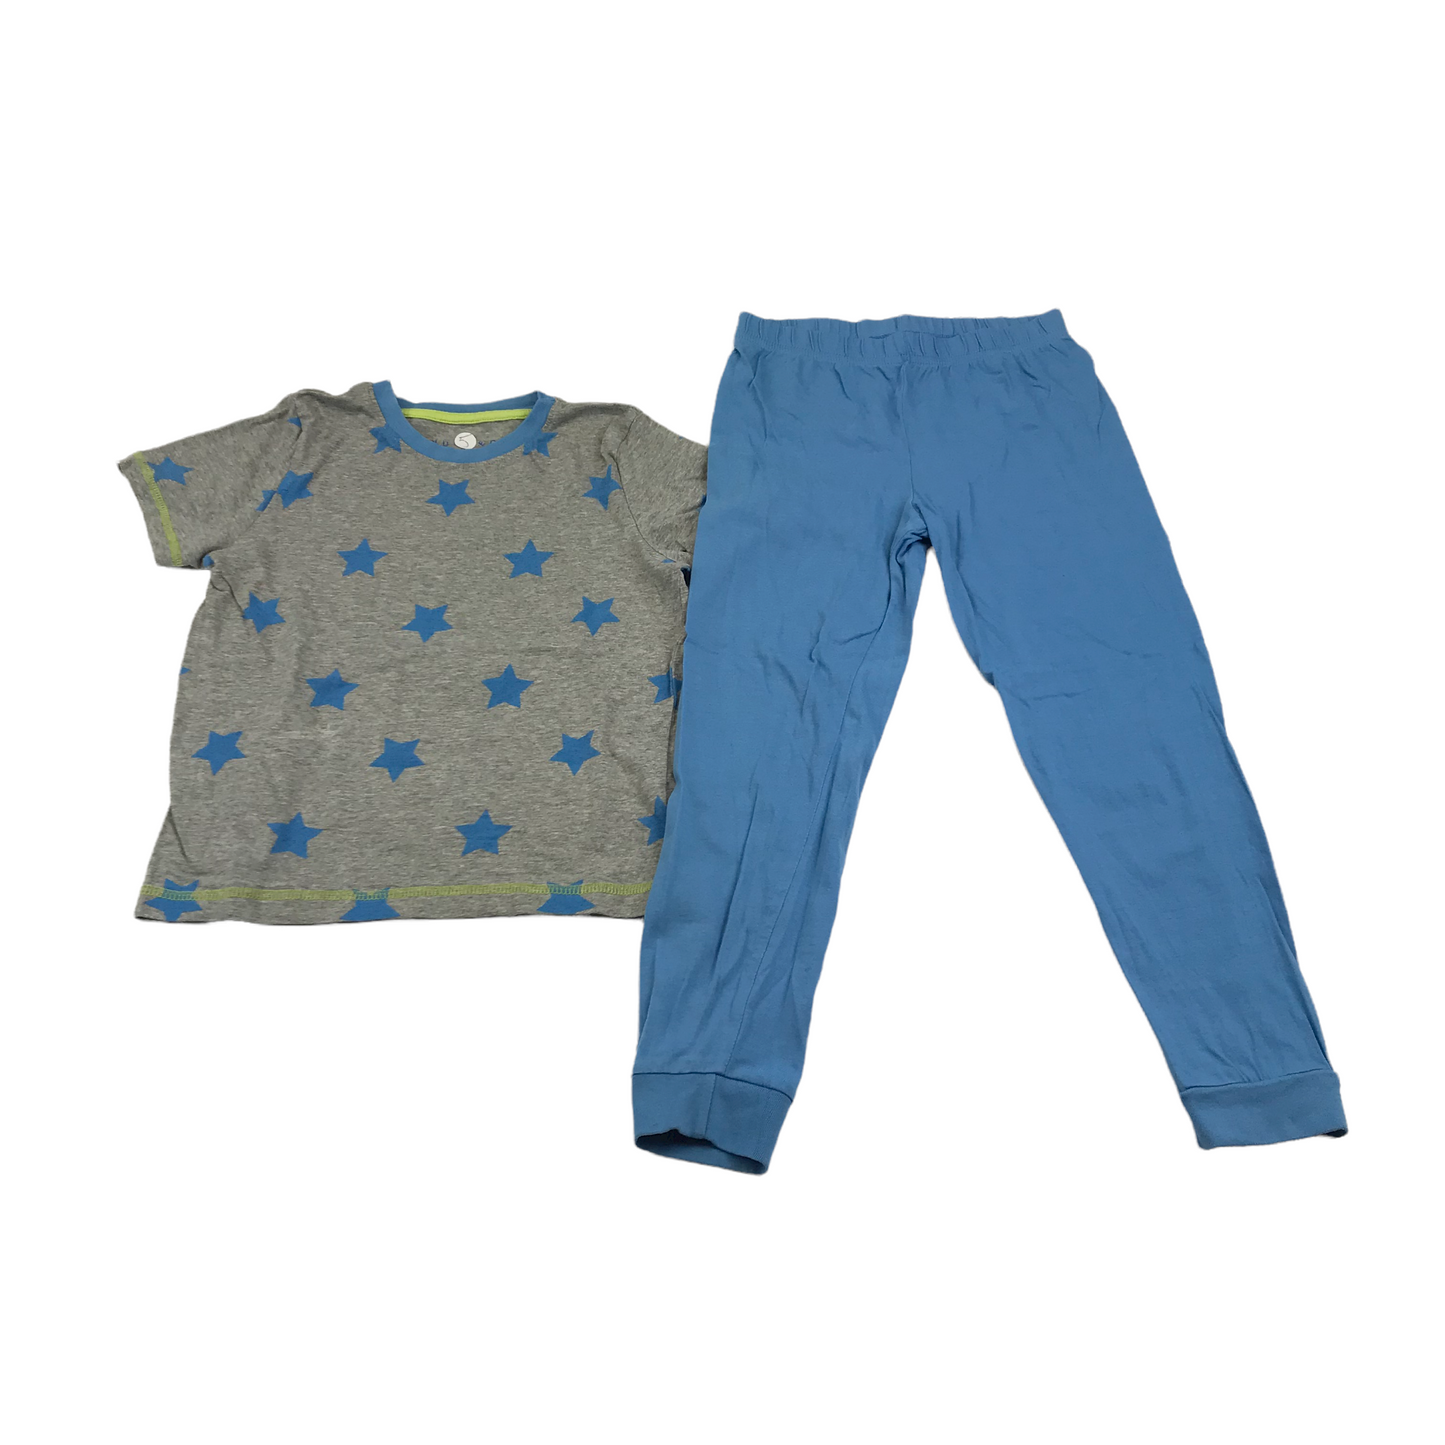 Nutmeg Grey and Blue Starry Pyjama Set Age 5